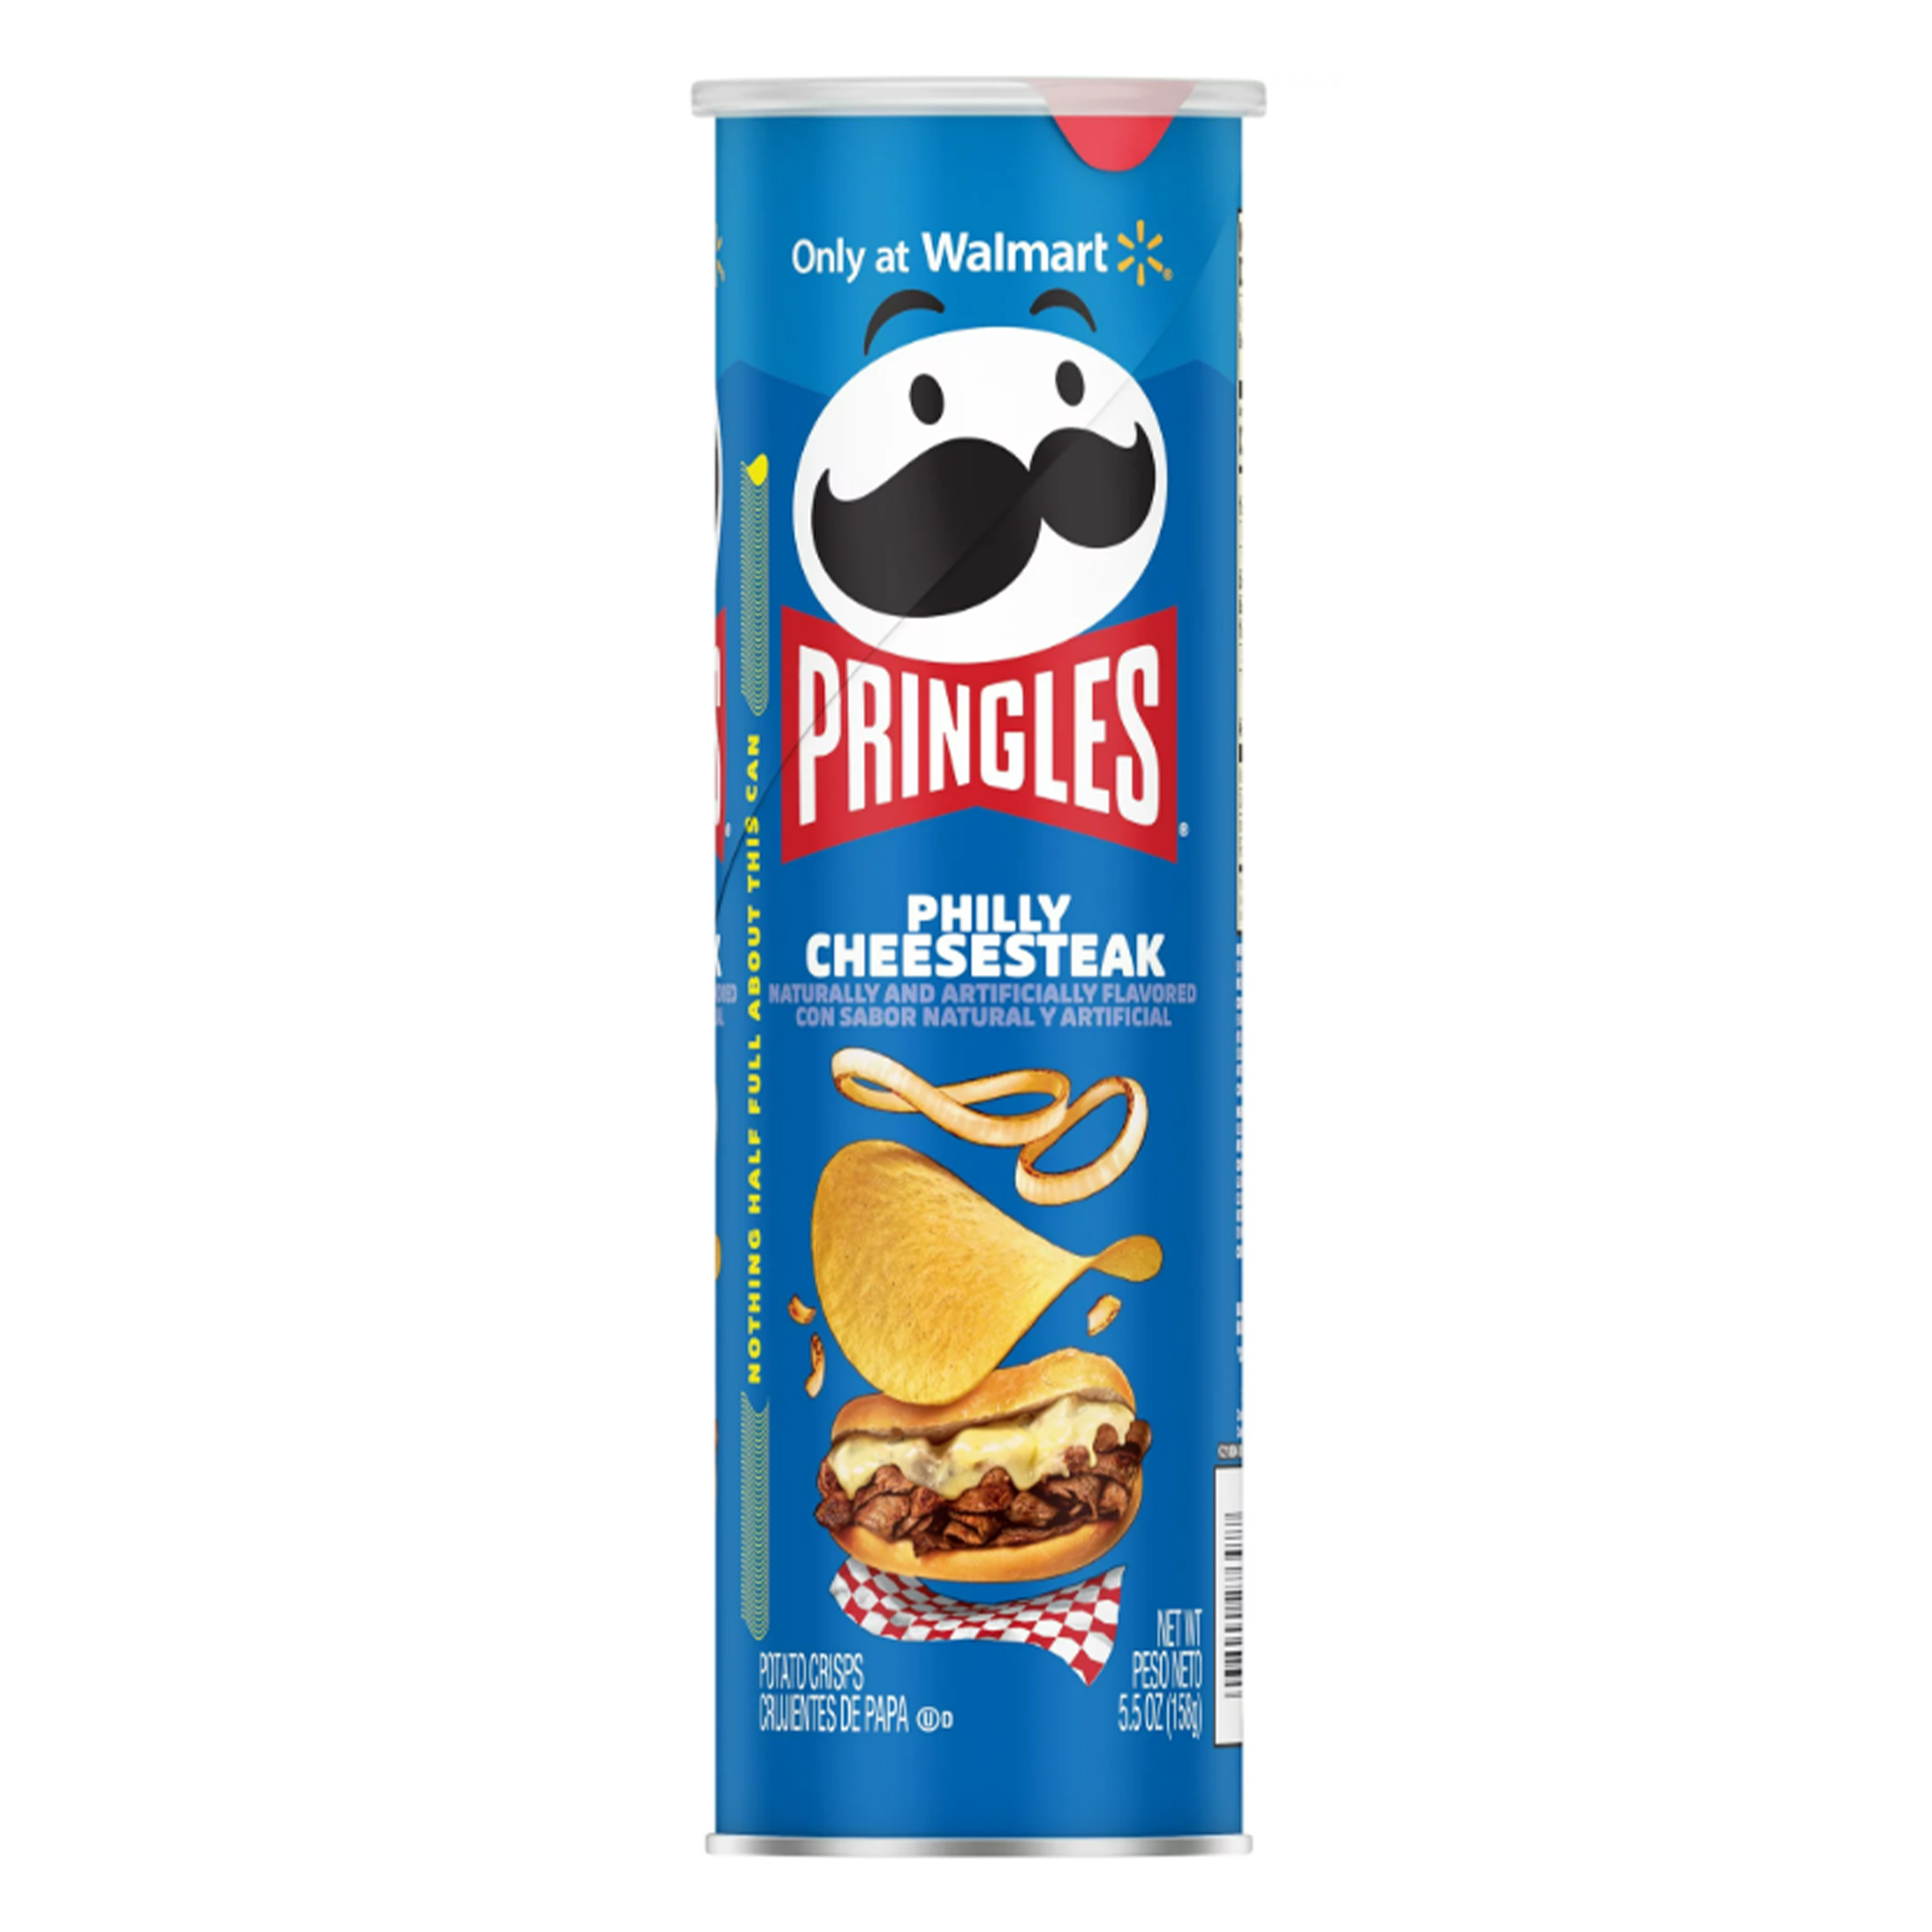 Pringles - Philly Cheesesteak